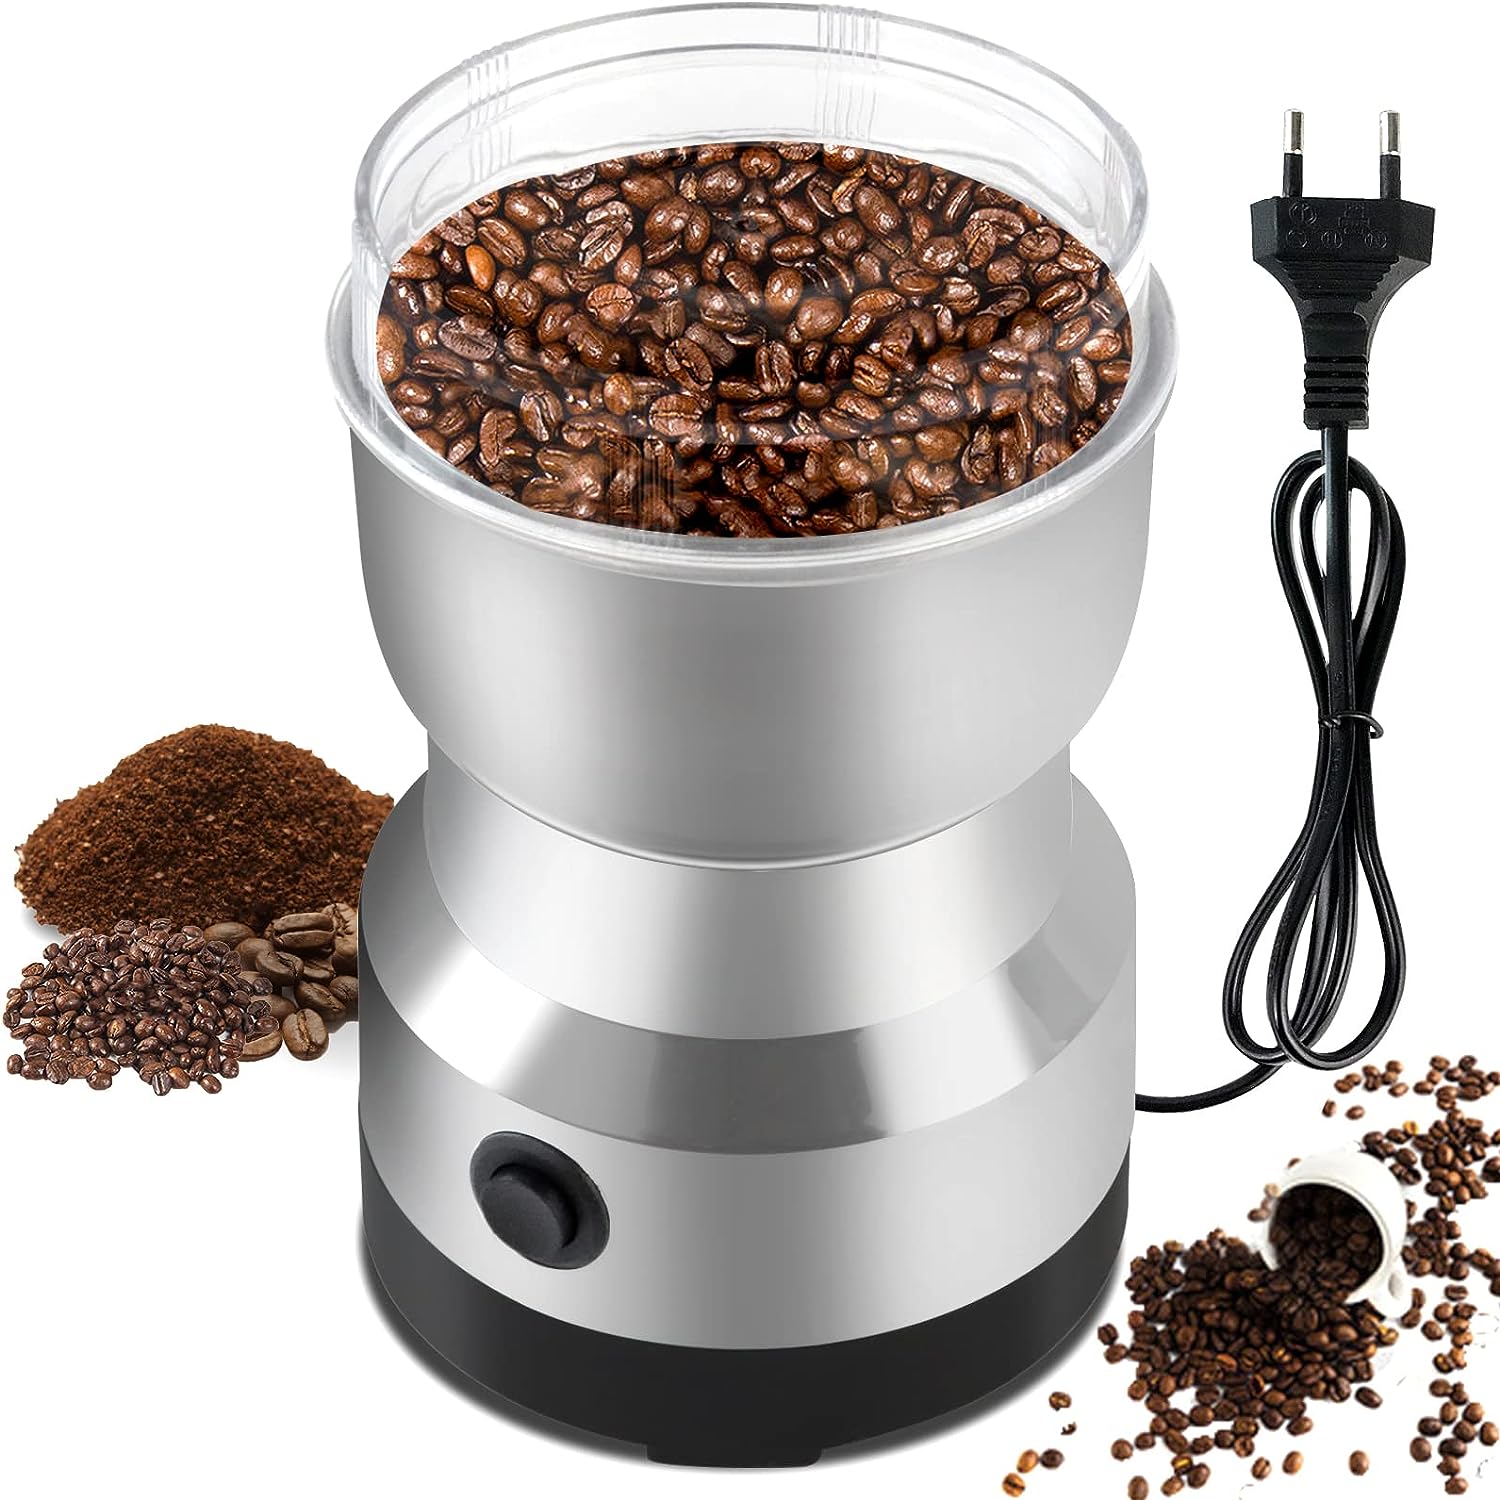 Electric Coffee Grinder, Coffee Grinder, Coffee Beans, Electric Coffee Grinder, 200W Spice Grinder for Grinding Seasoning, Herbs, Nuts, Peppers and Seeds, Capacity of 300g, Fast Grinding